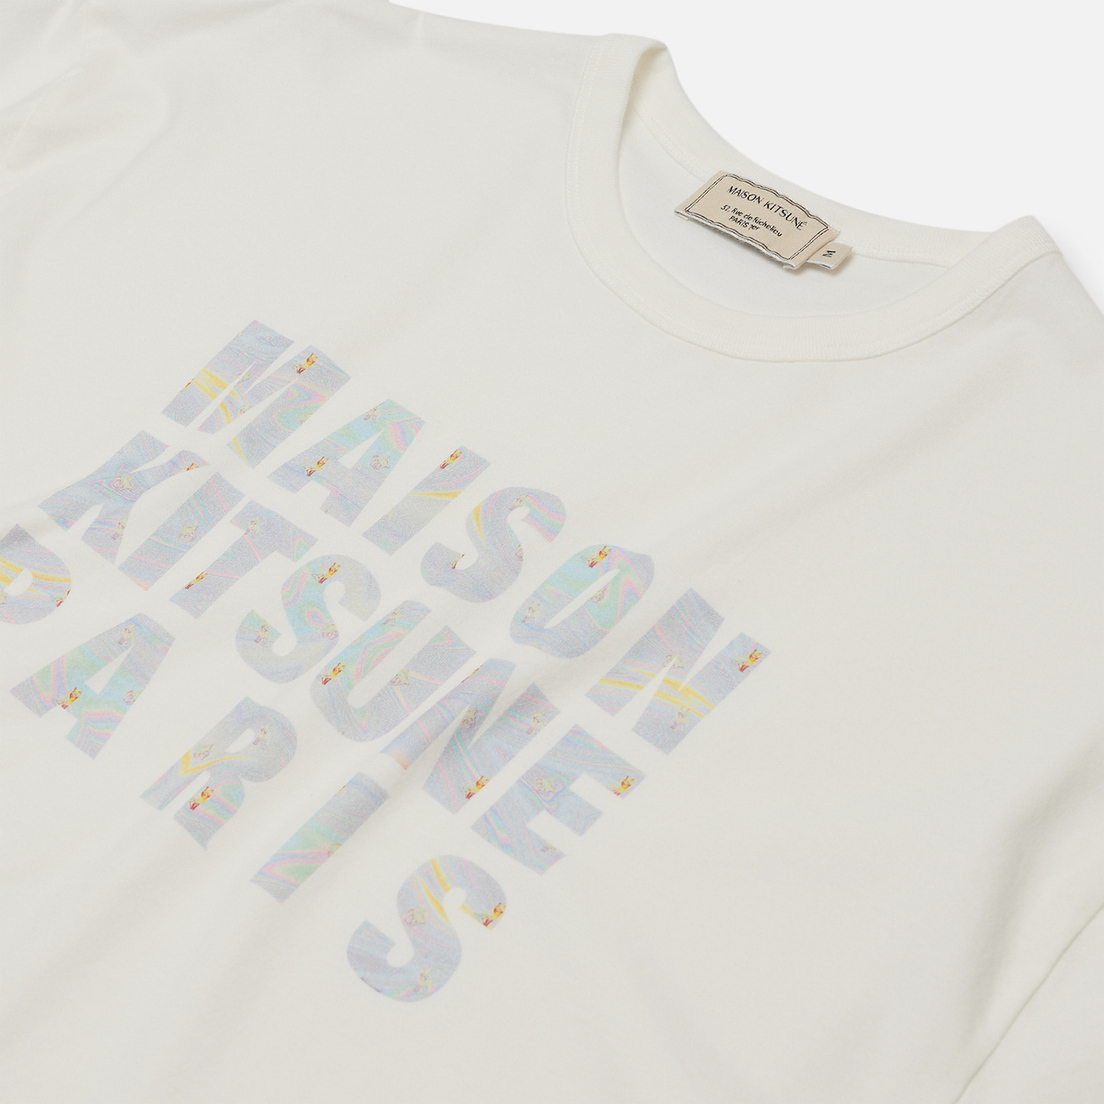 Maison Kitsune Мужская футболка Hologram Maison Kitsune